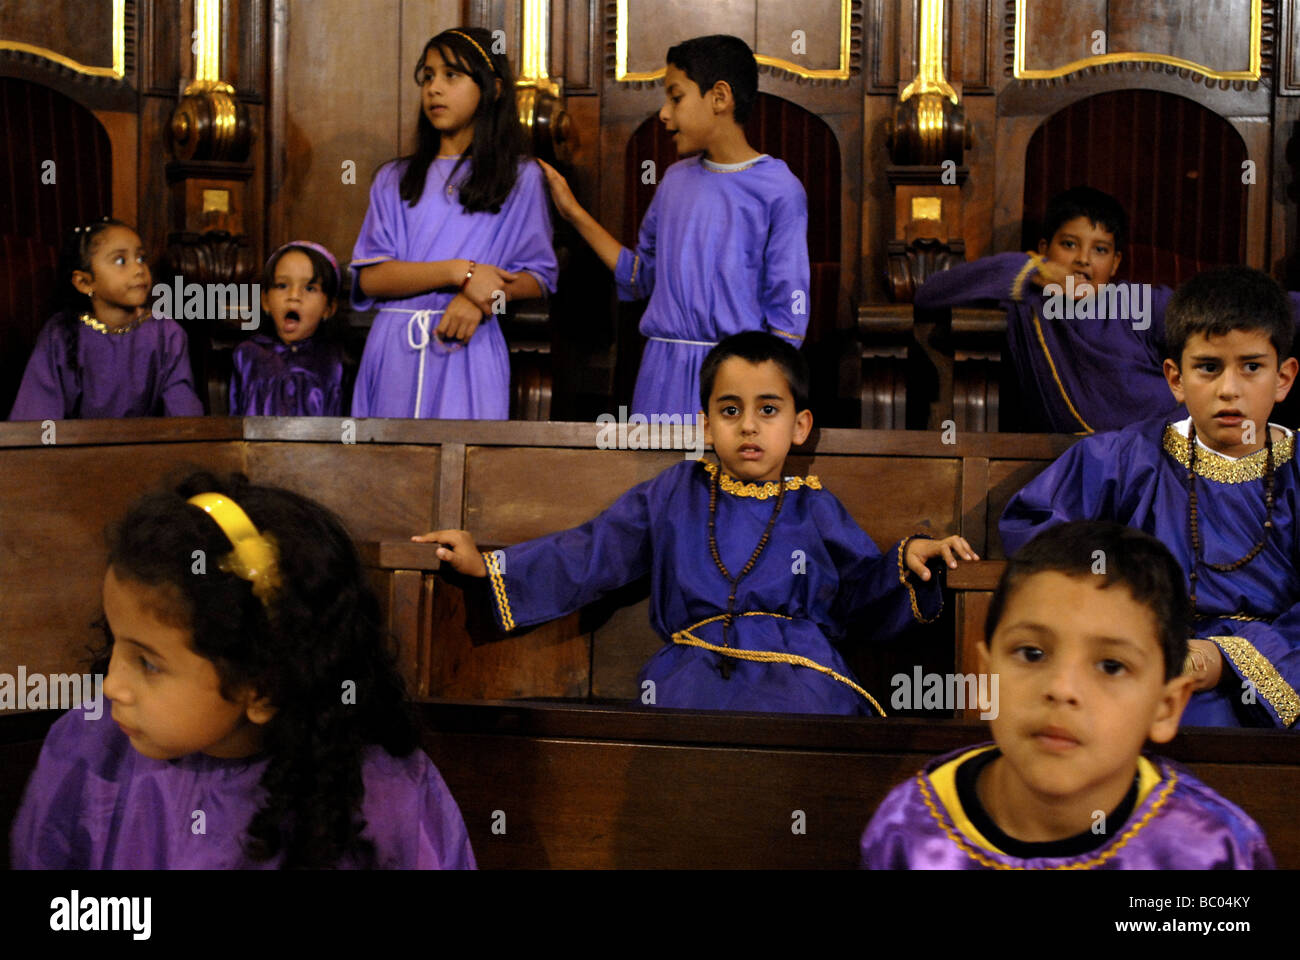 Children attend holy week mass dressed in traditional purple robes in Merida, Venezuela. Stock Photo